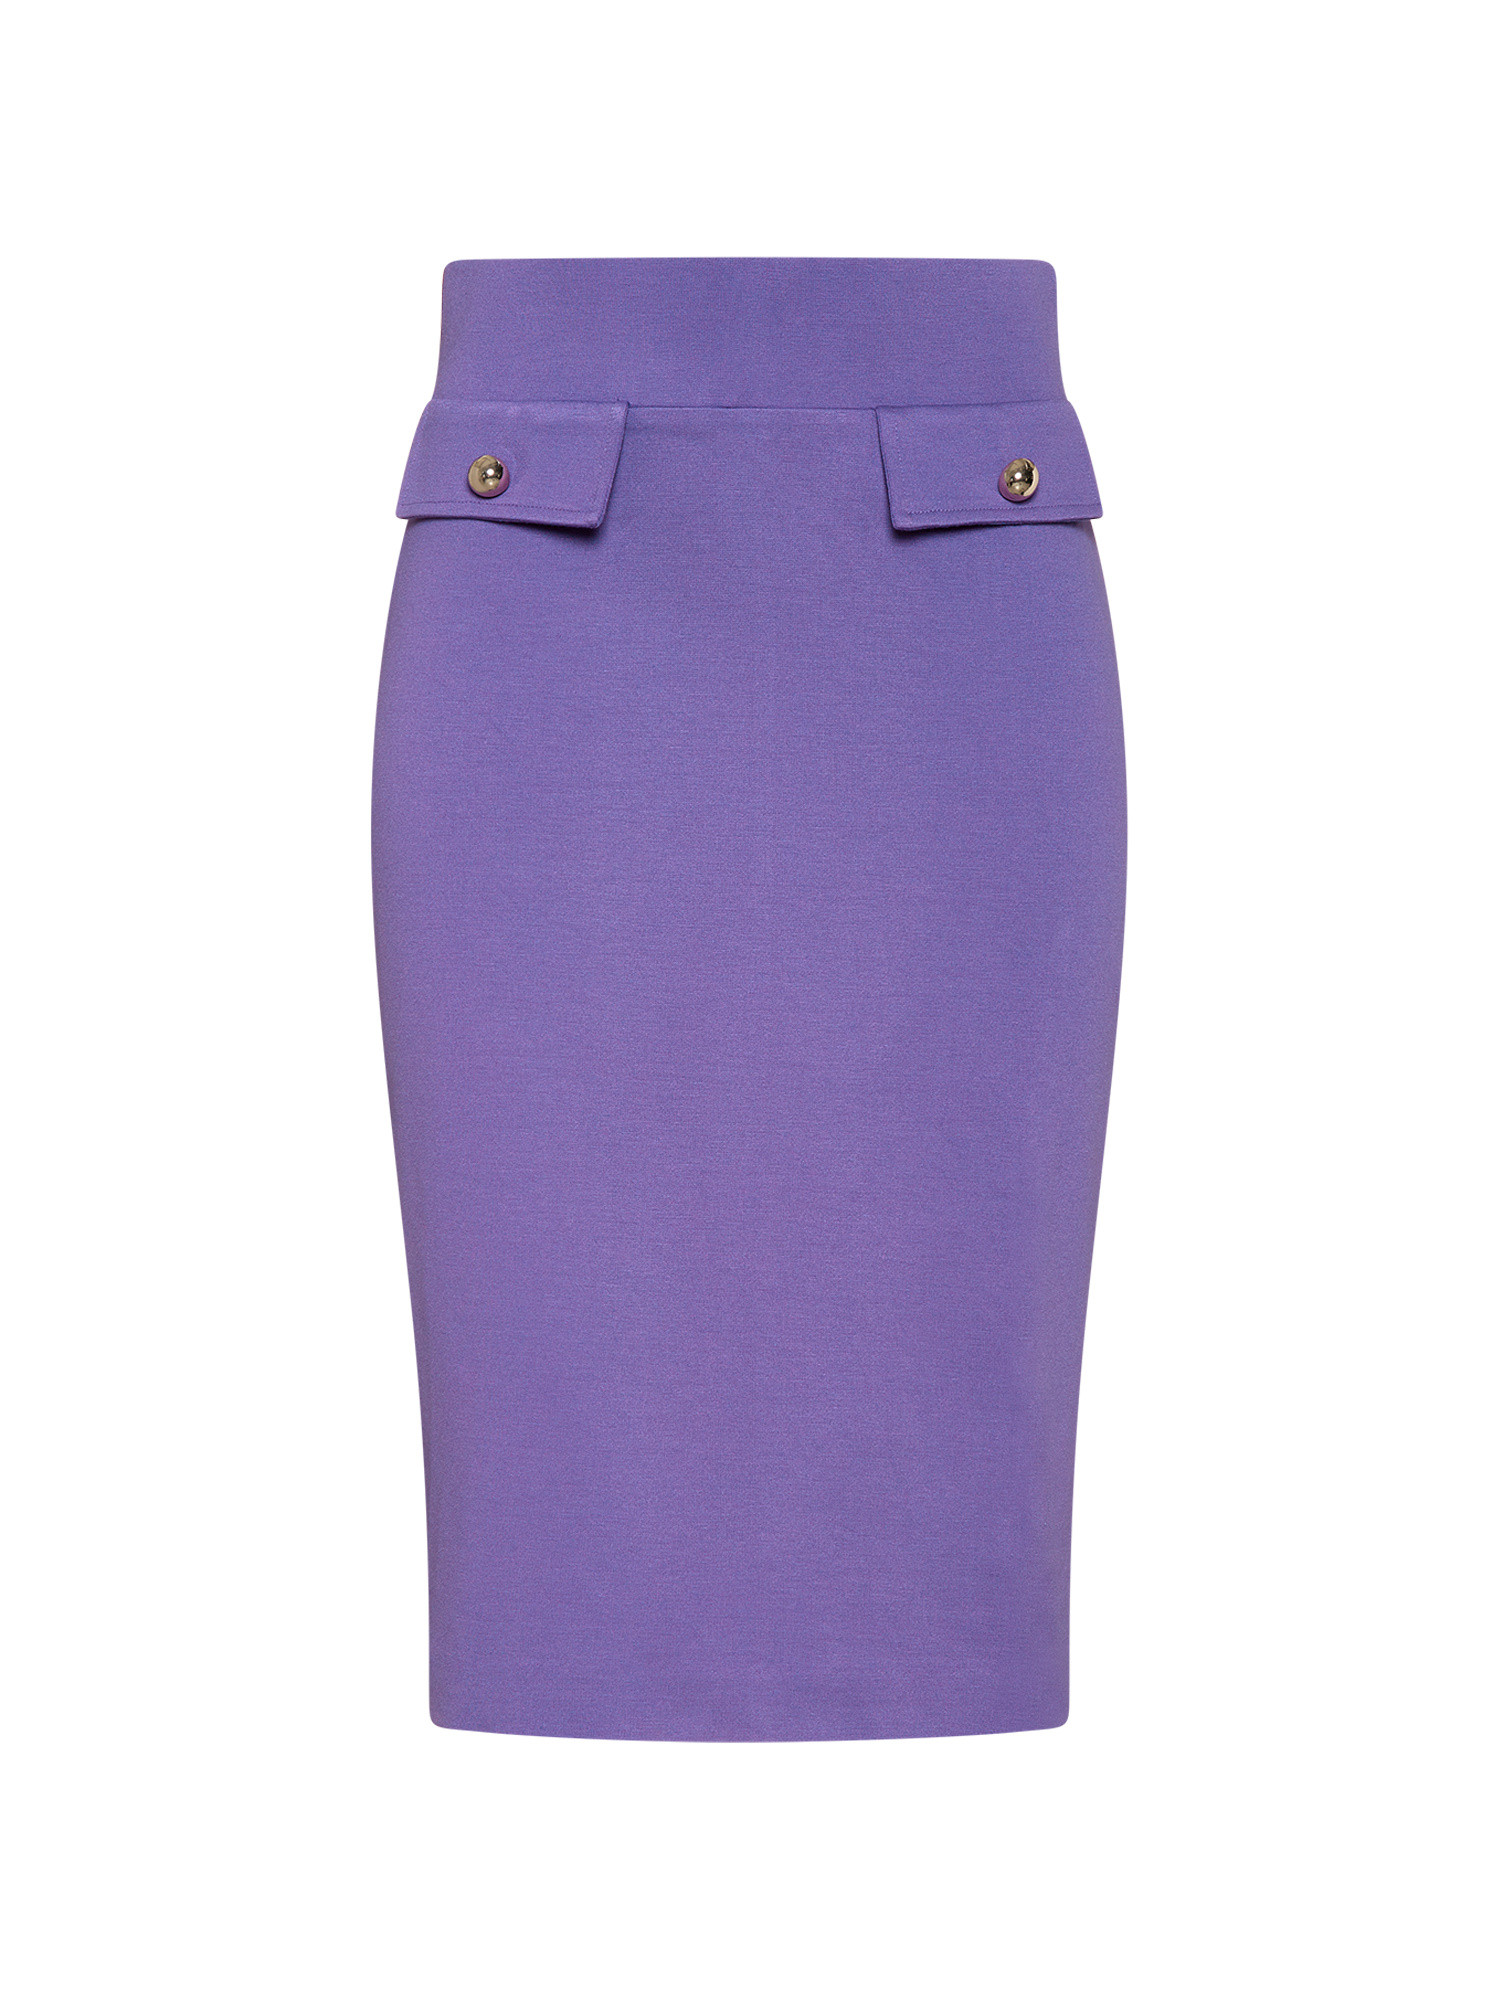 Koan - Milano stitch skirt, Purple, large image number 0